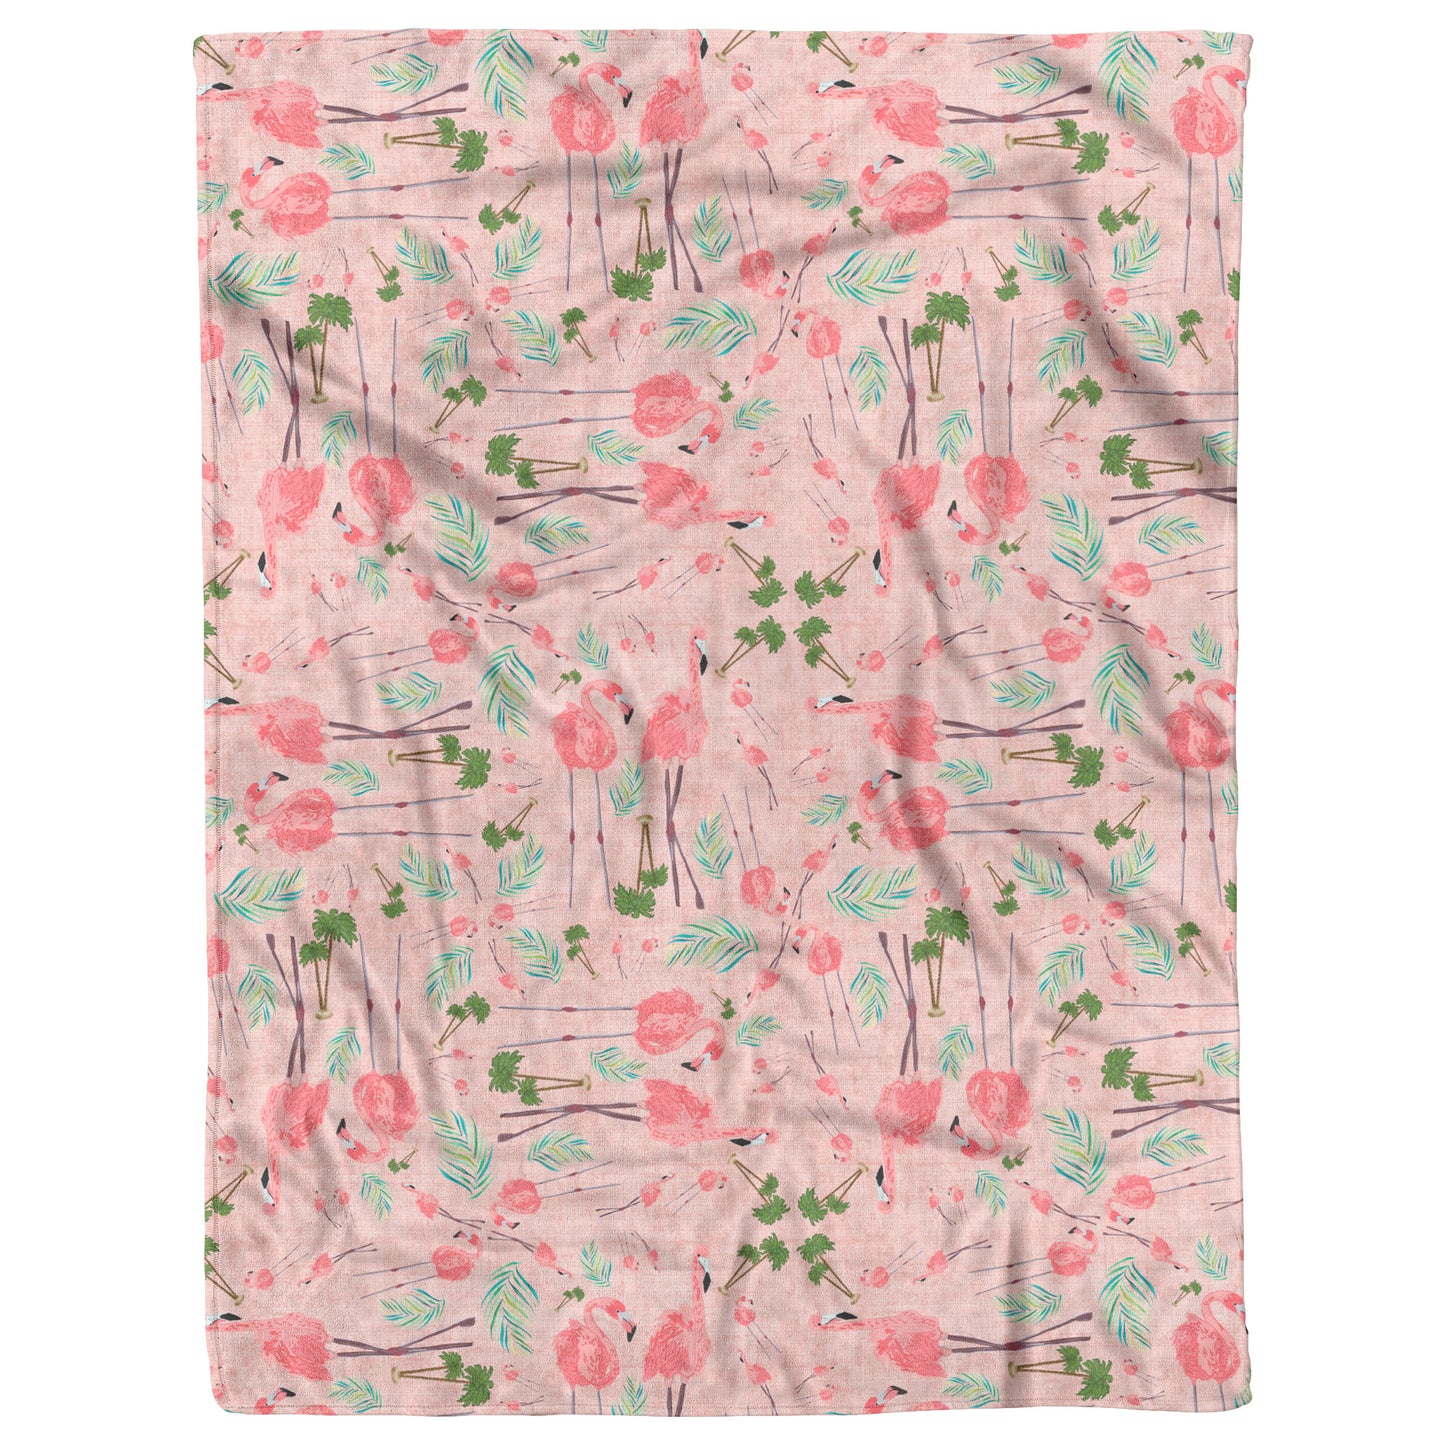 Flamingo Party on Coral Linen Textured Background, Fleece Blanket